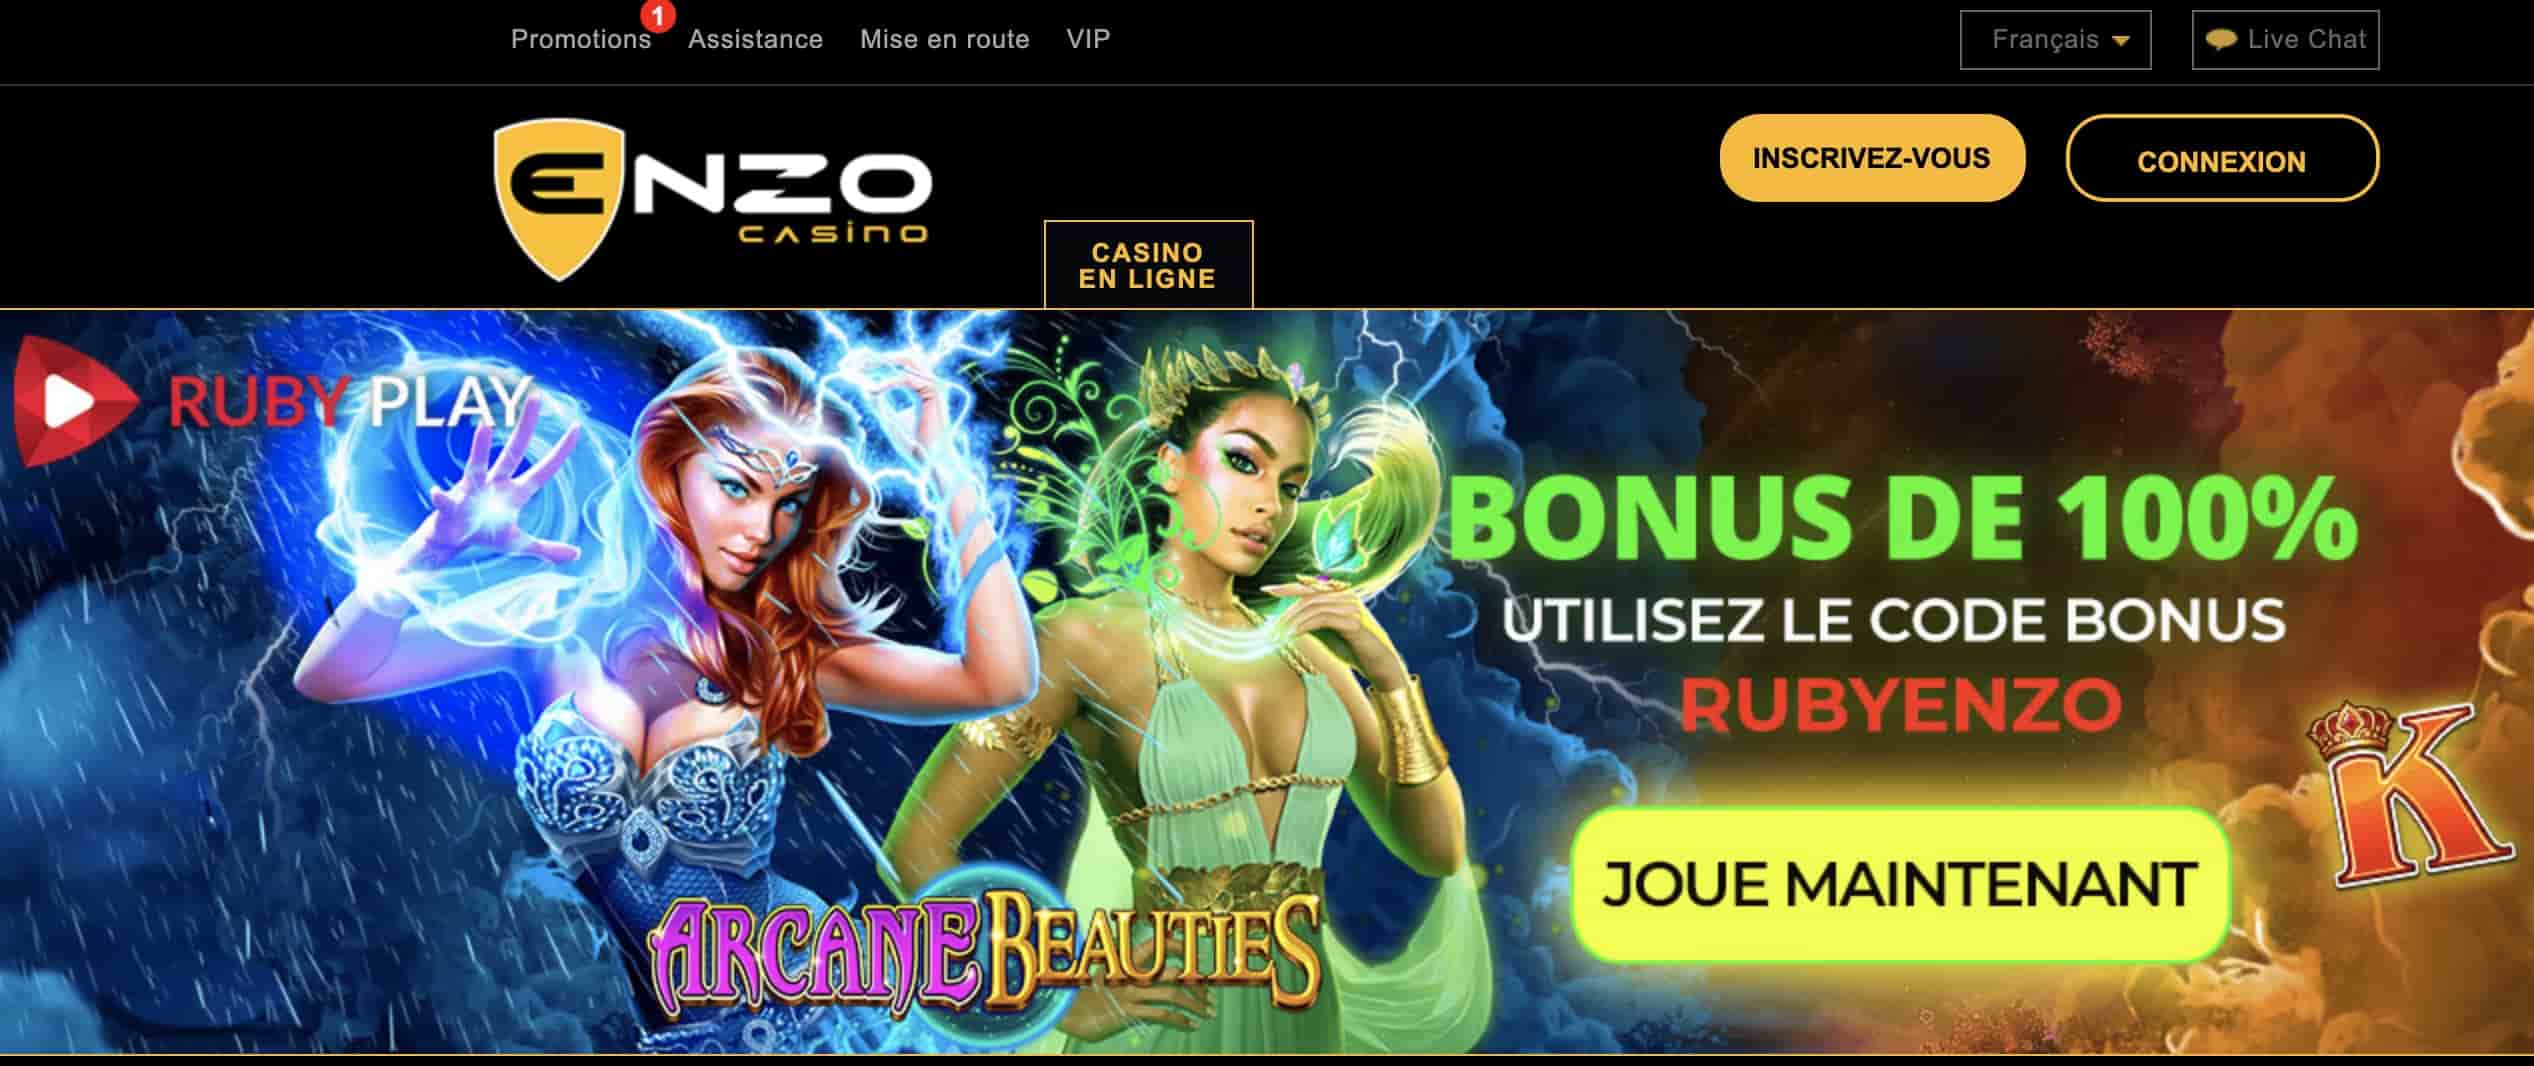 enzo casino homepage